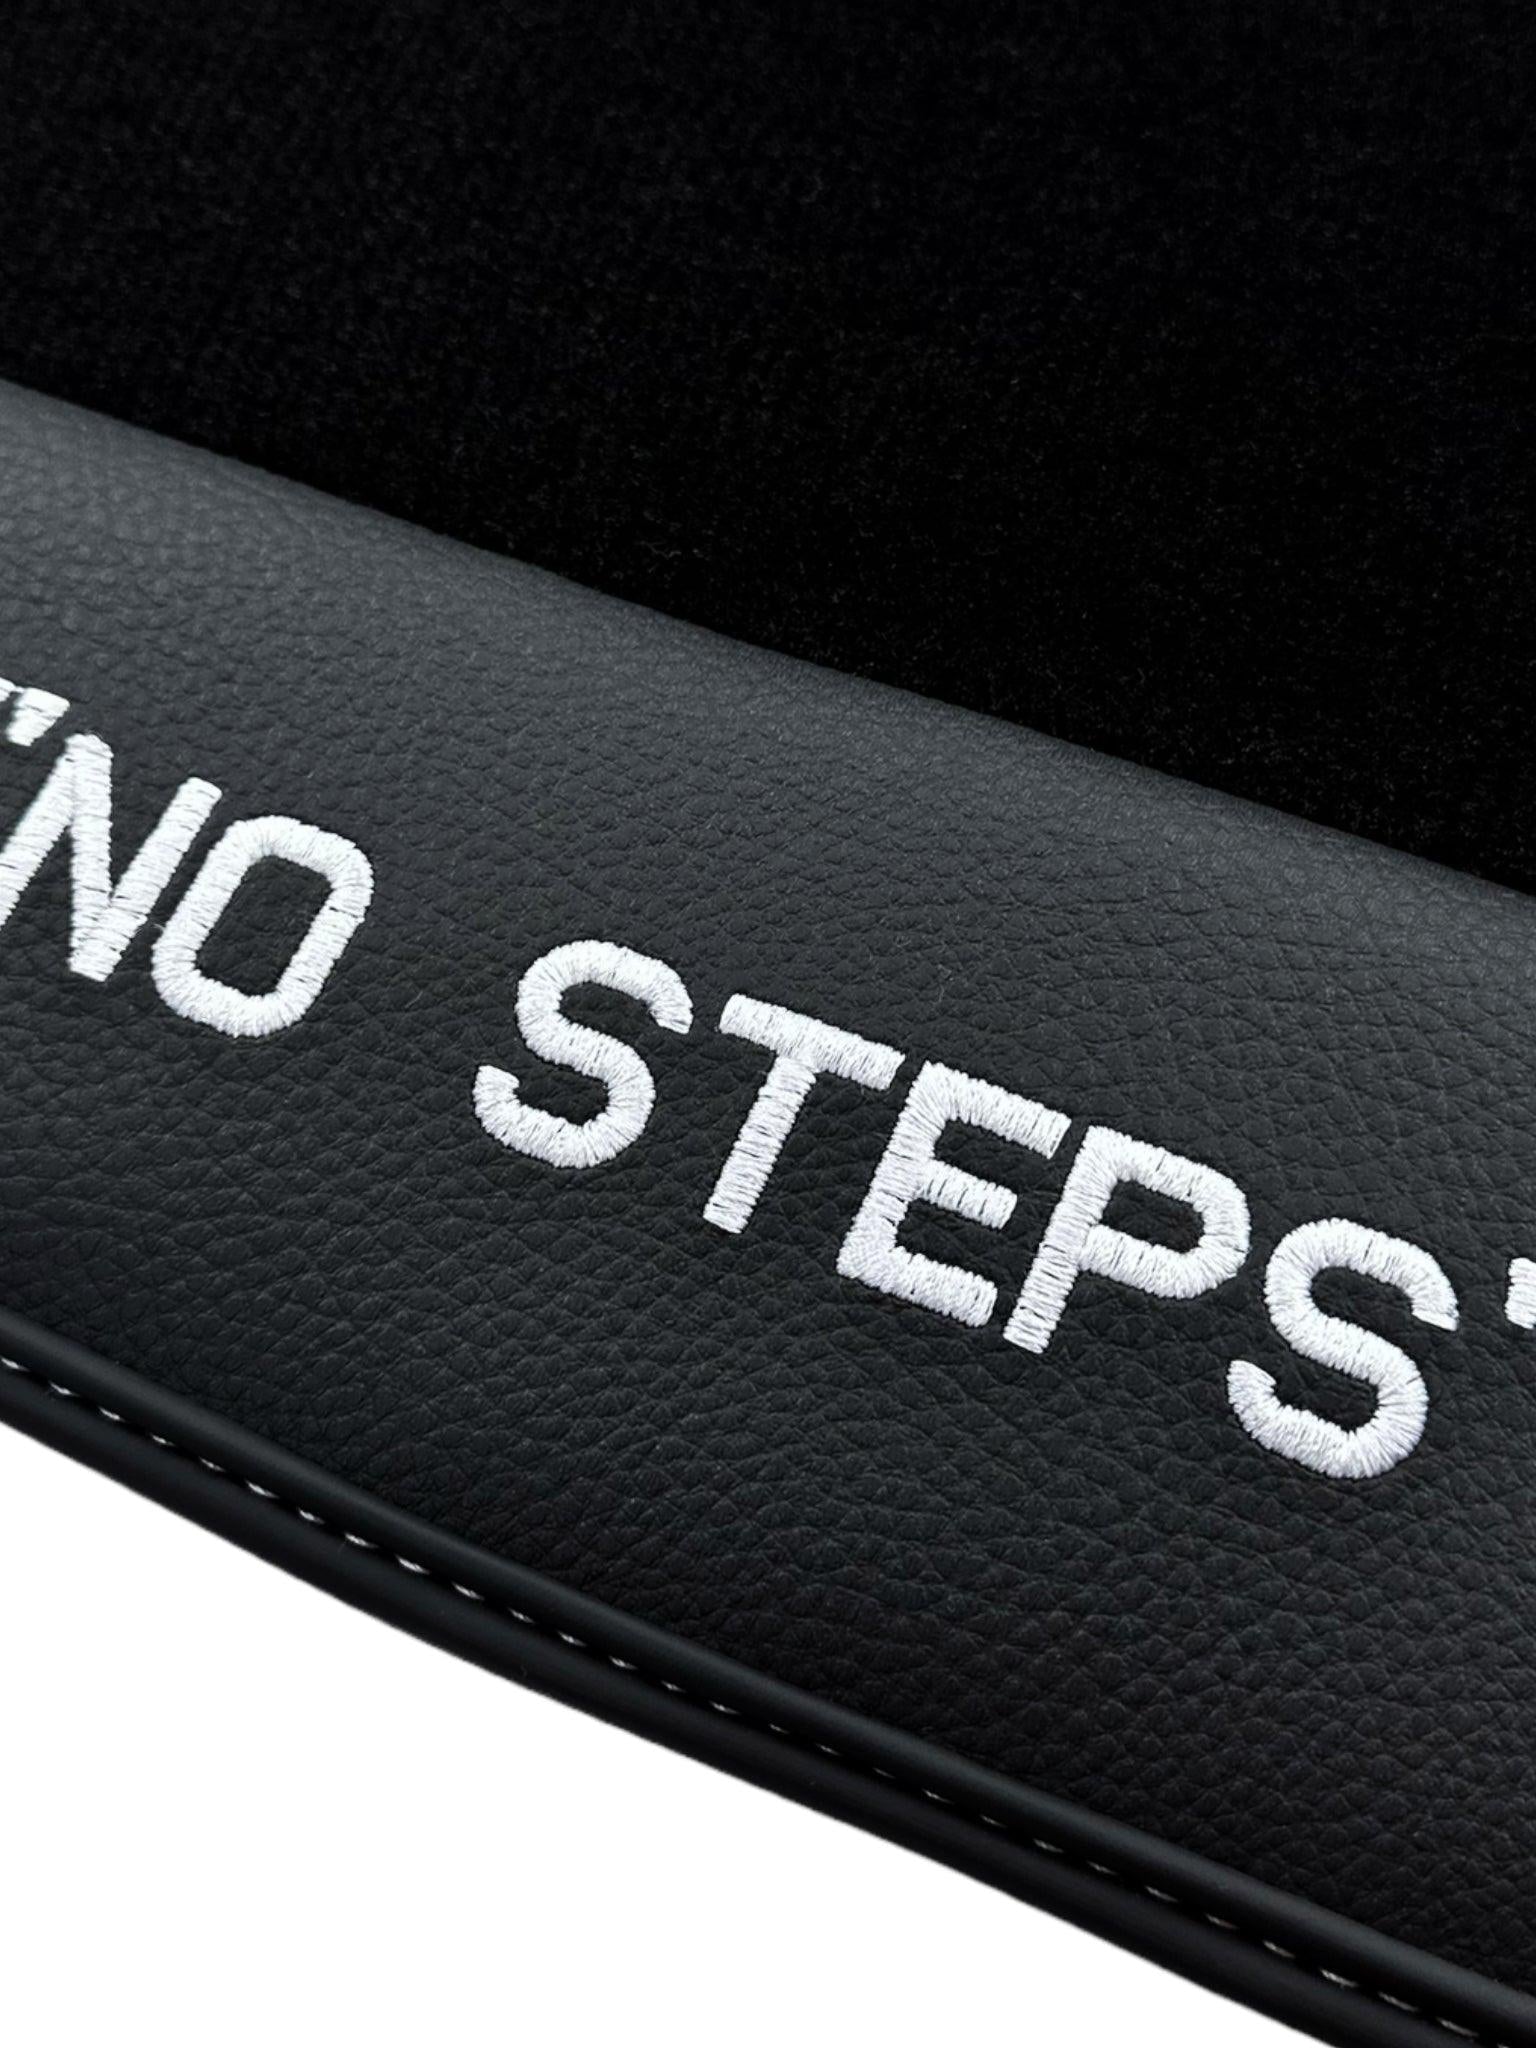 Black Floor Mats for Audi A3 - Convertible (2008-2013) | No Steps Edition